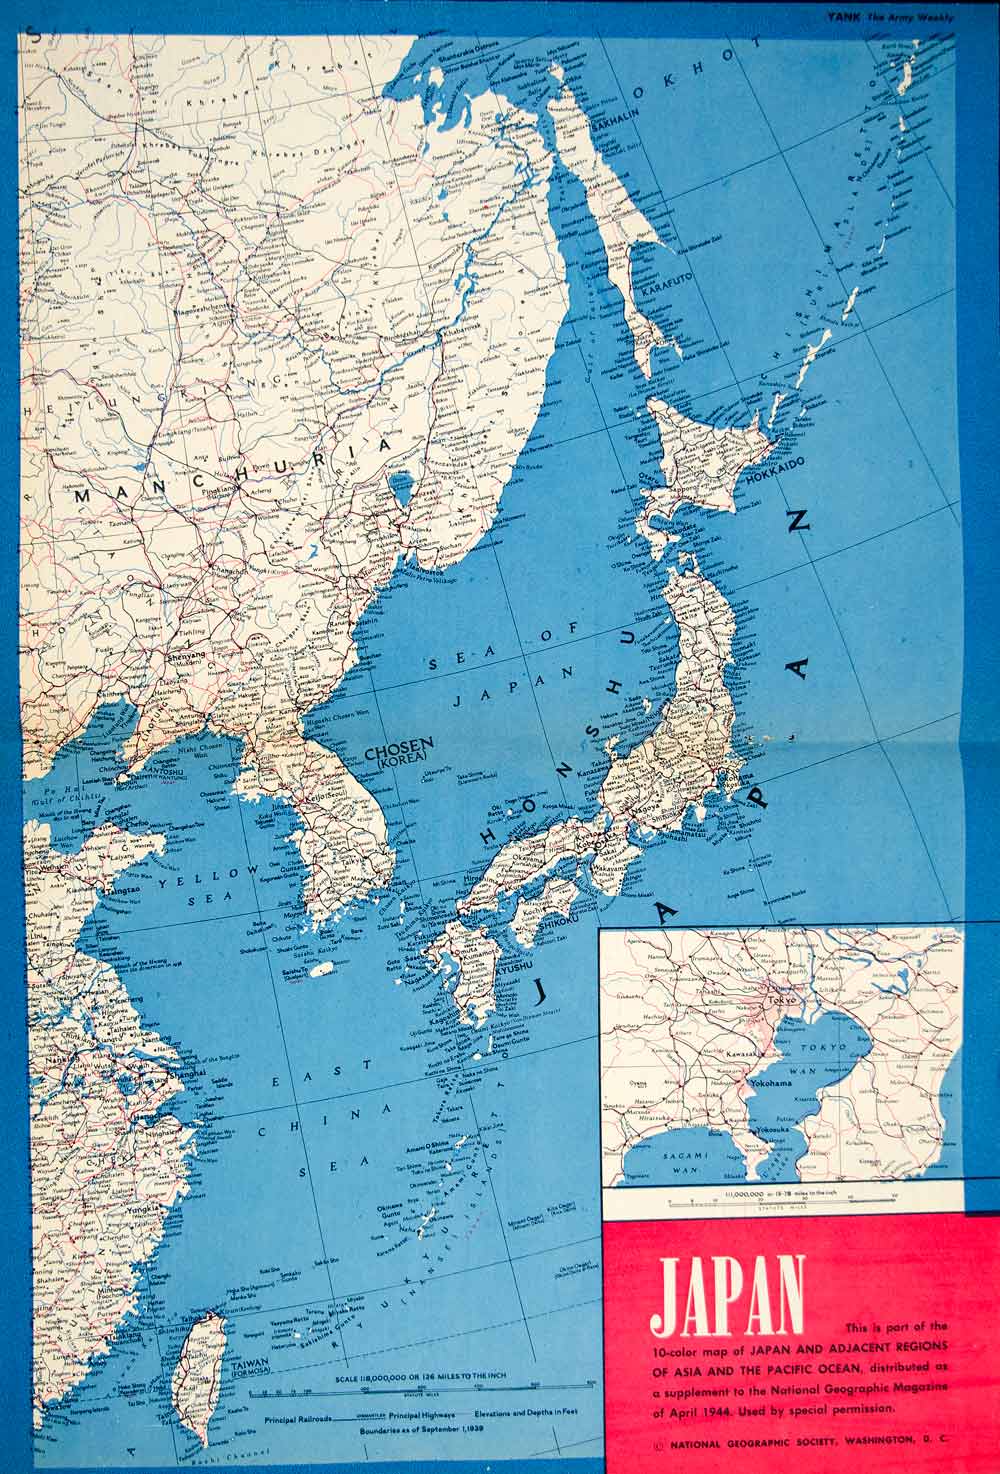 1945 Map Yank Japan China Philippines World War II Asia Region Historical YYA2